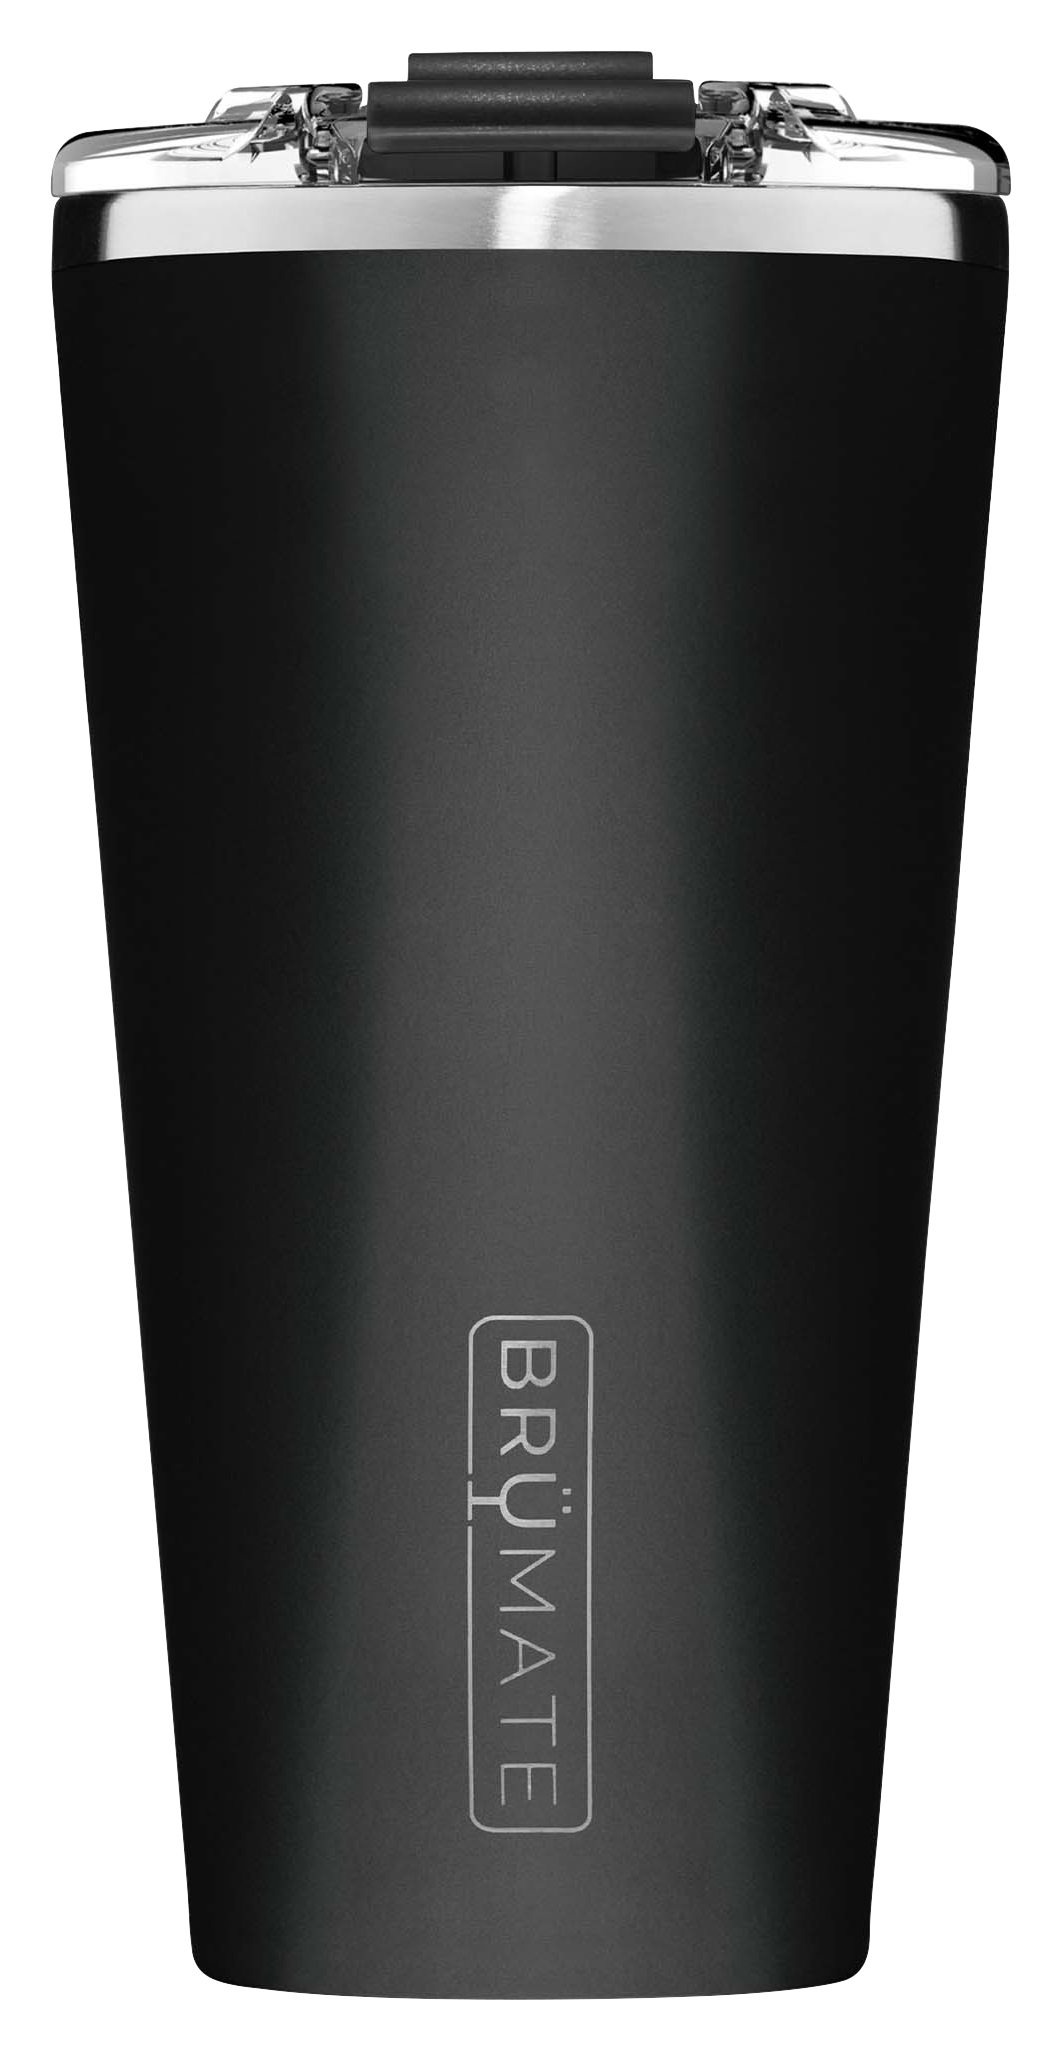 BruMate Toddy 22 oz Matte Black BPA Free Insulated Tumbler 